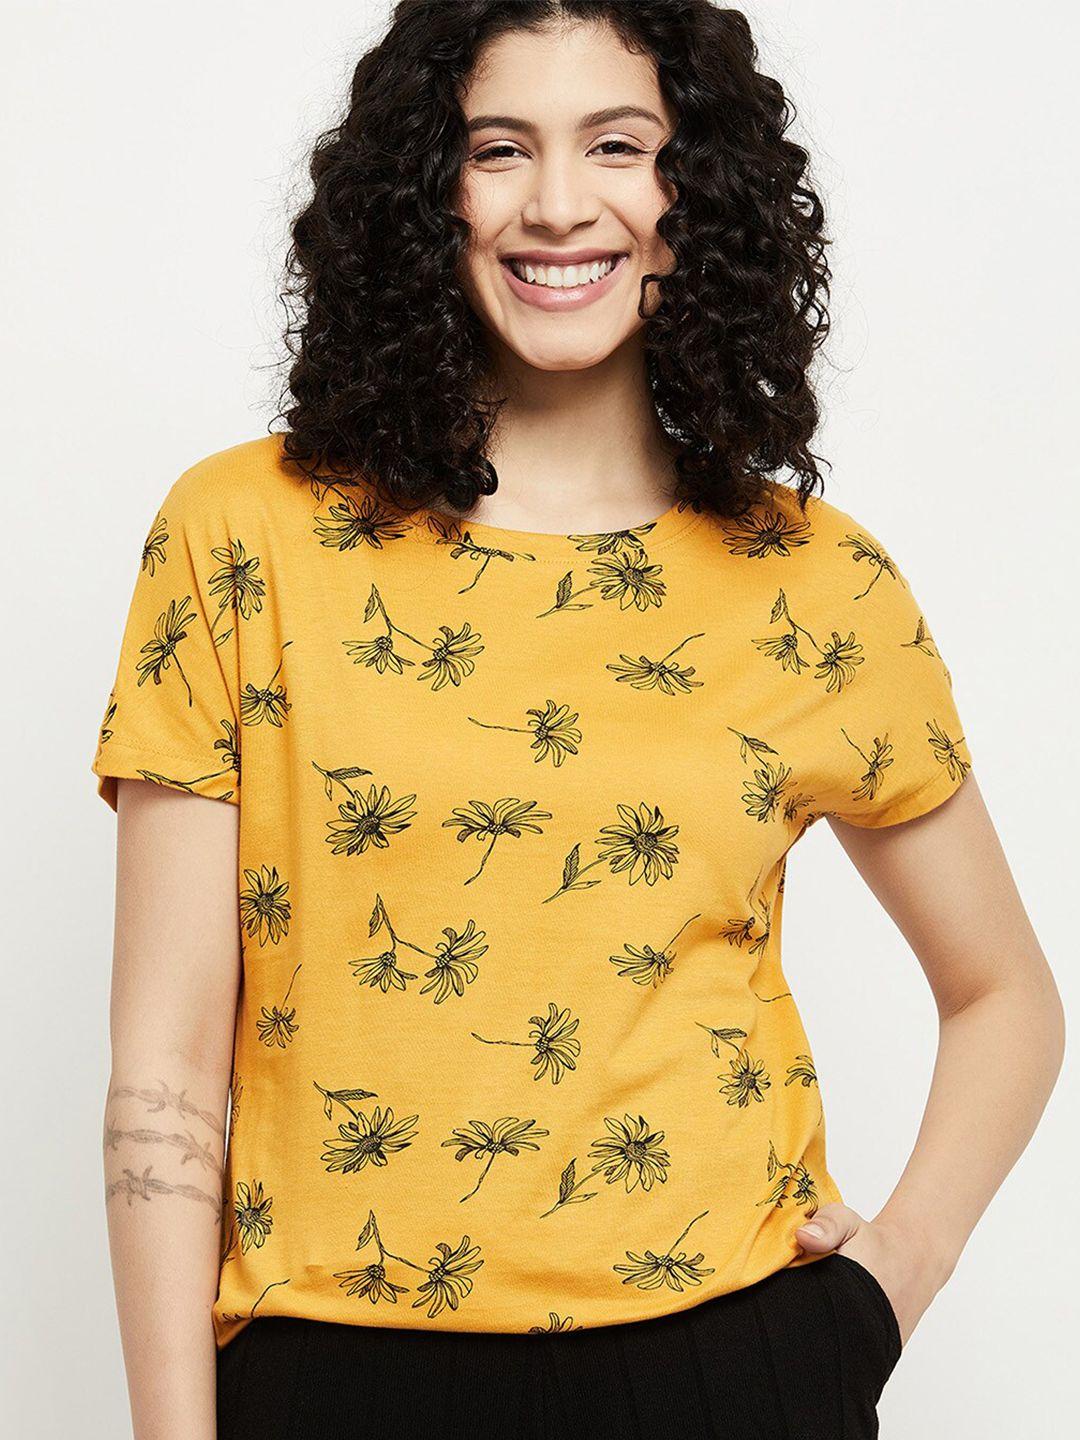 max women yellow & black floral printed t-shirt